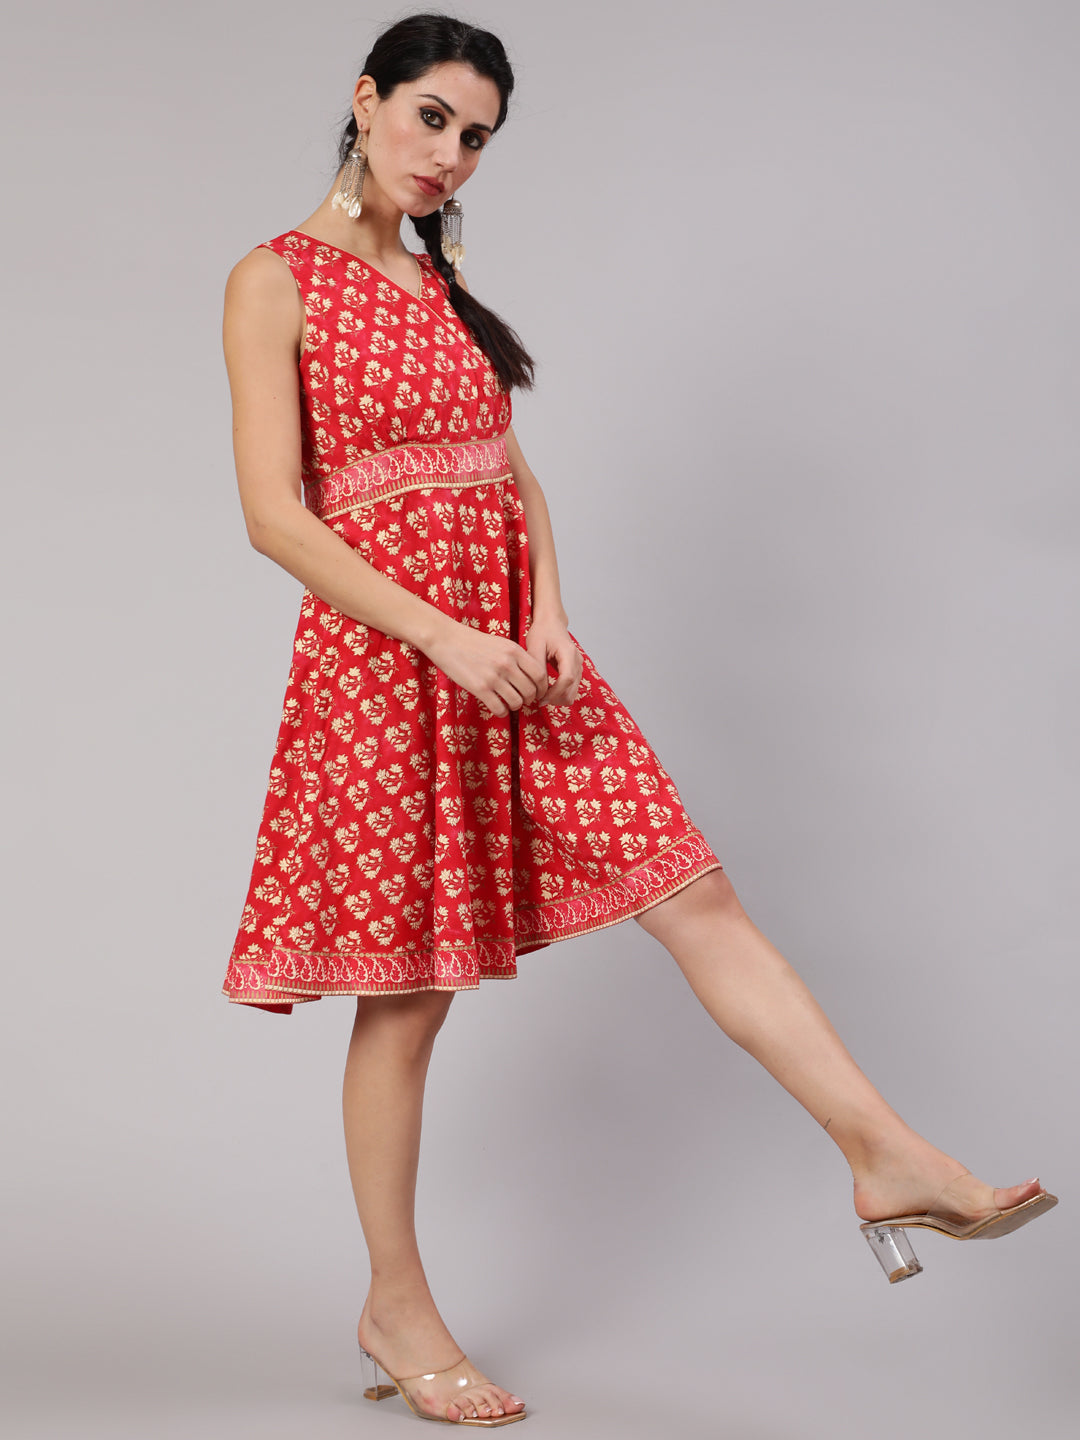 Red Floral Print Knee Length Dress